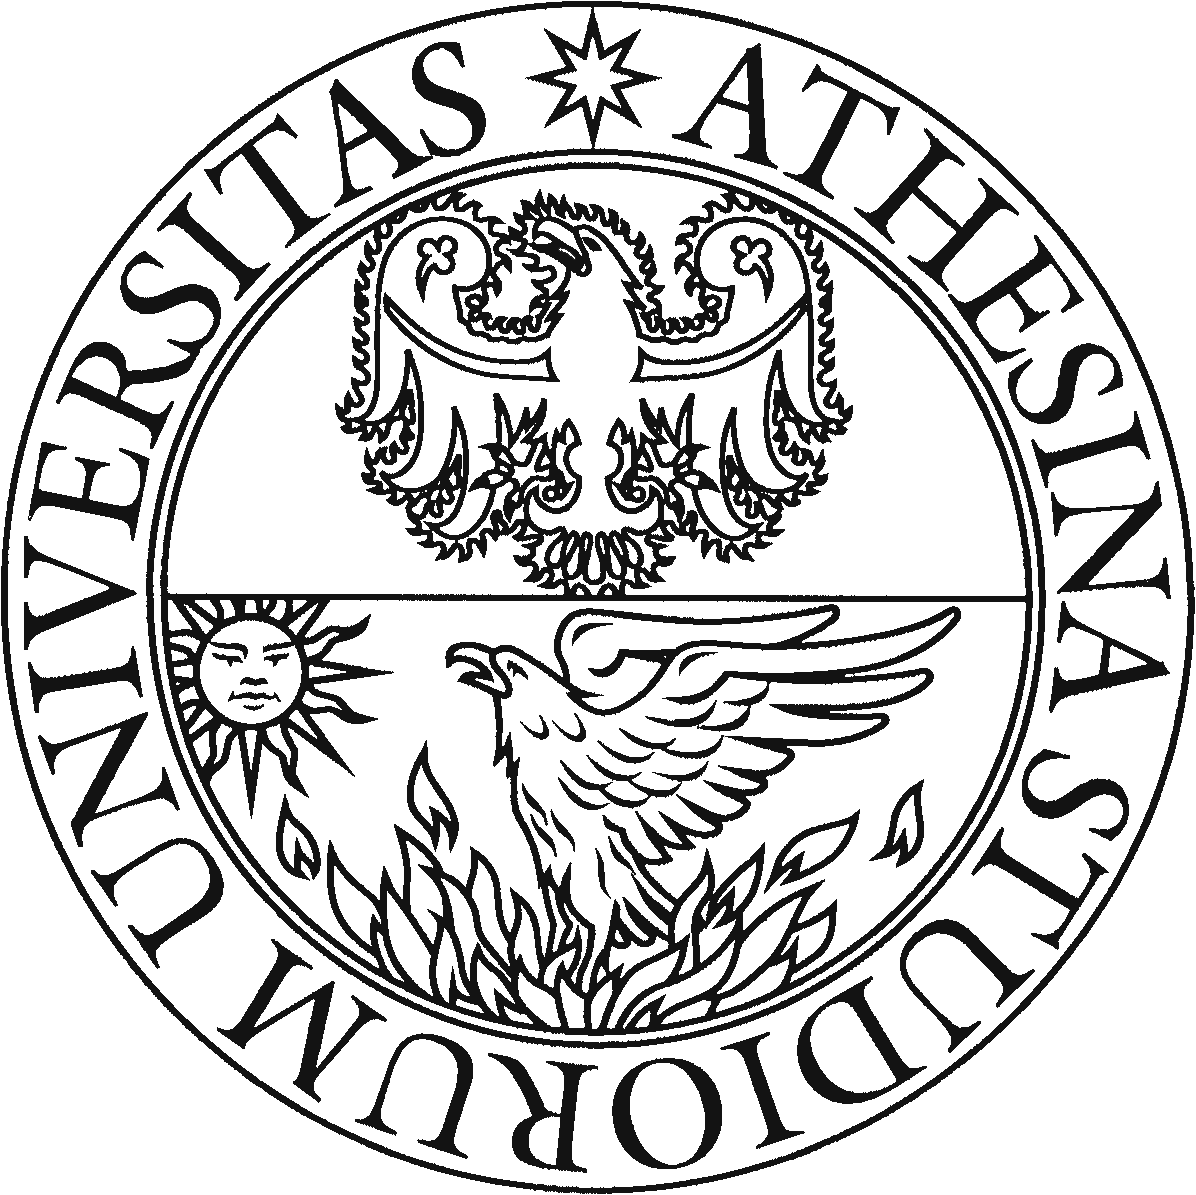 Logo of University of Trento